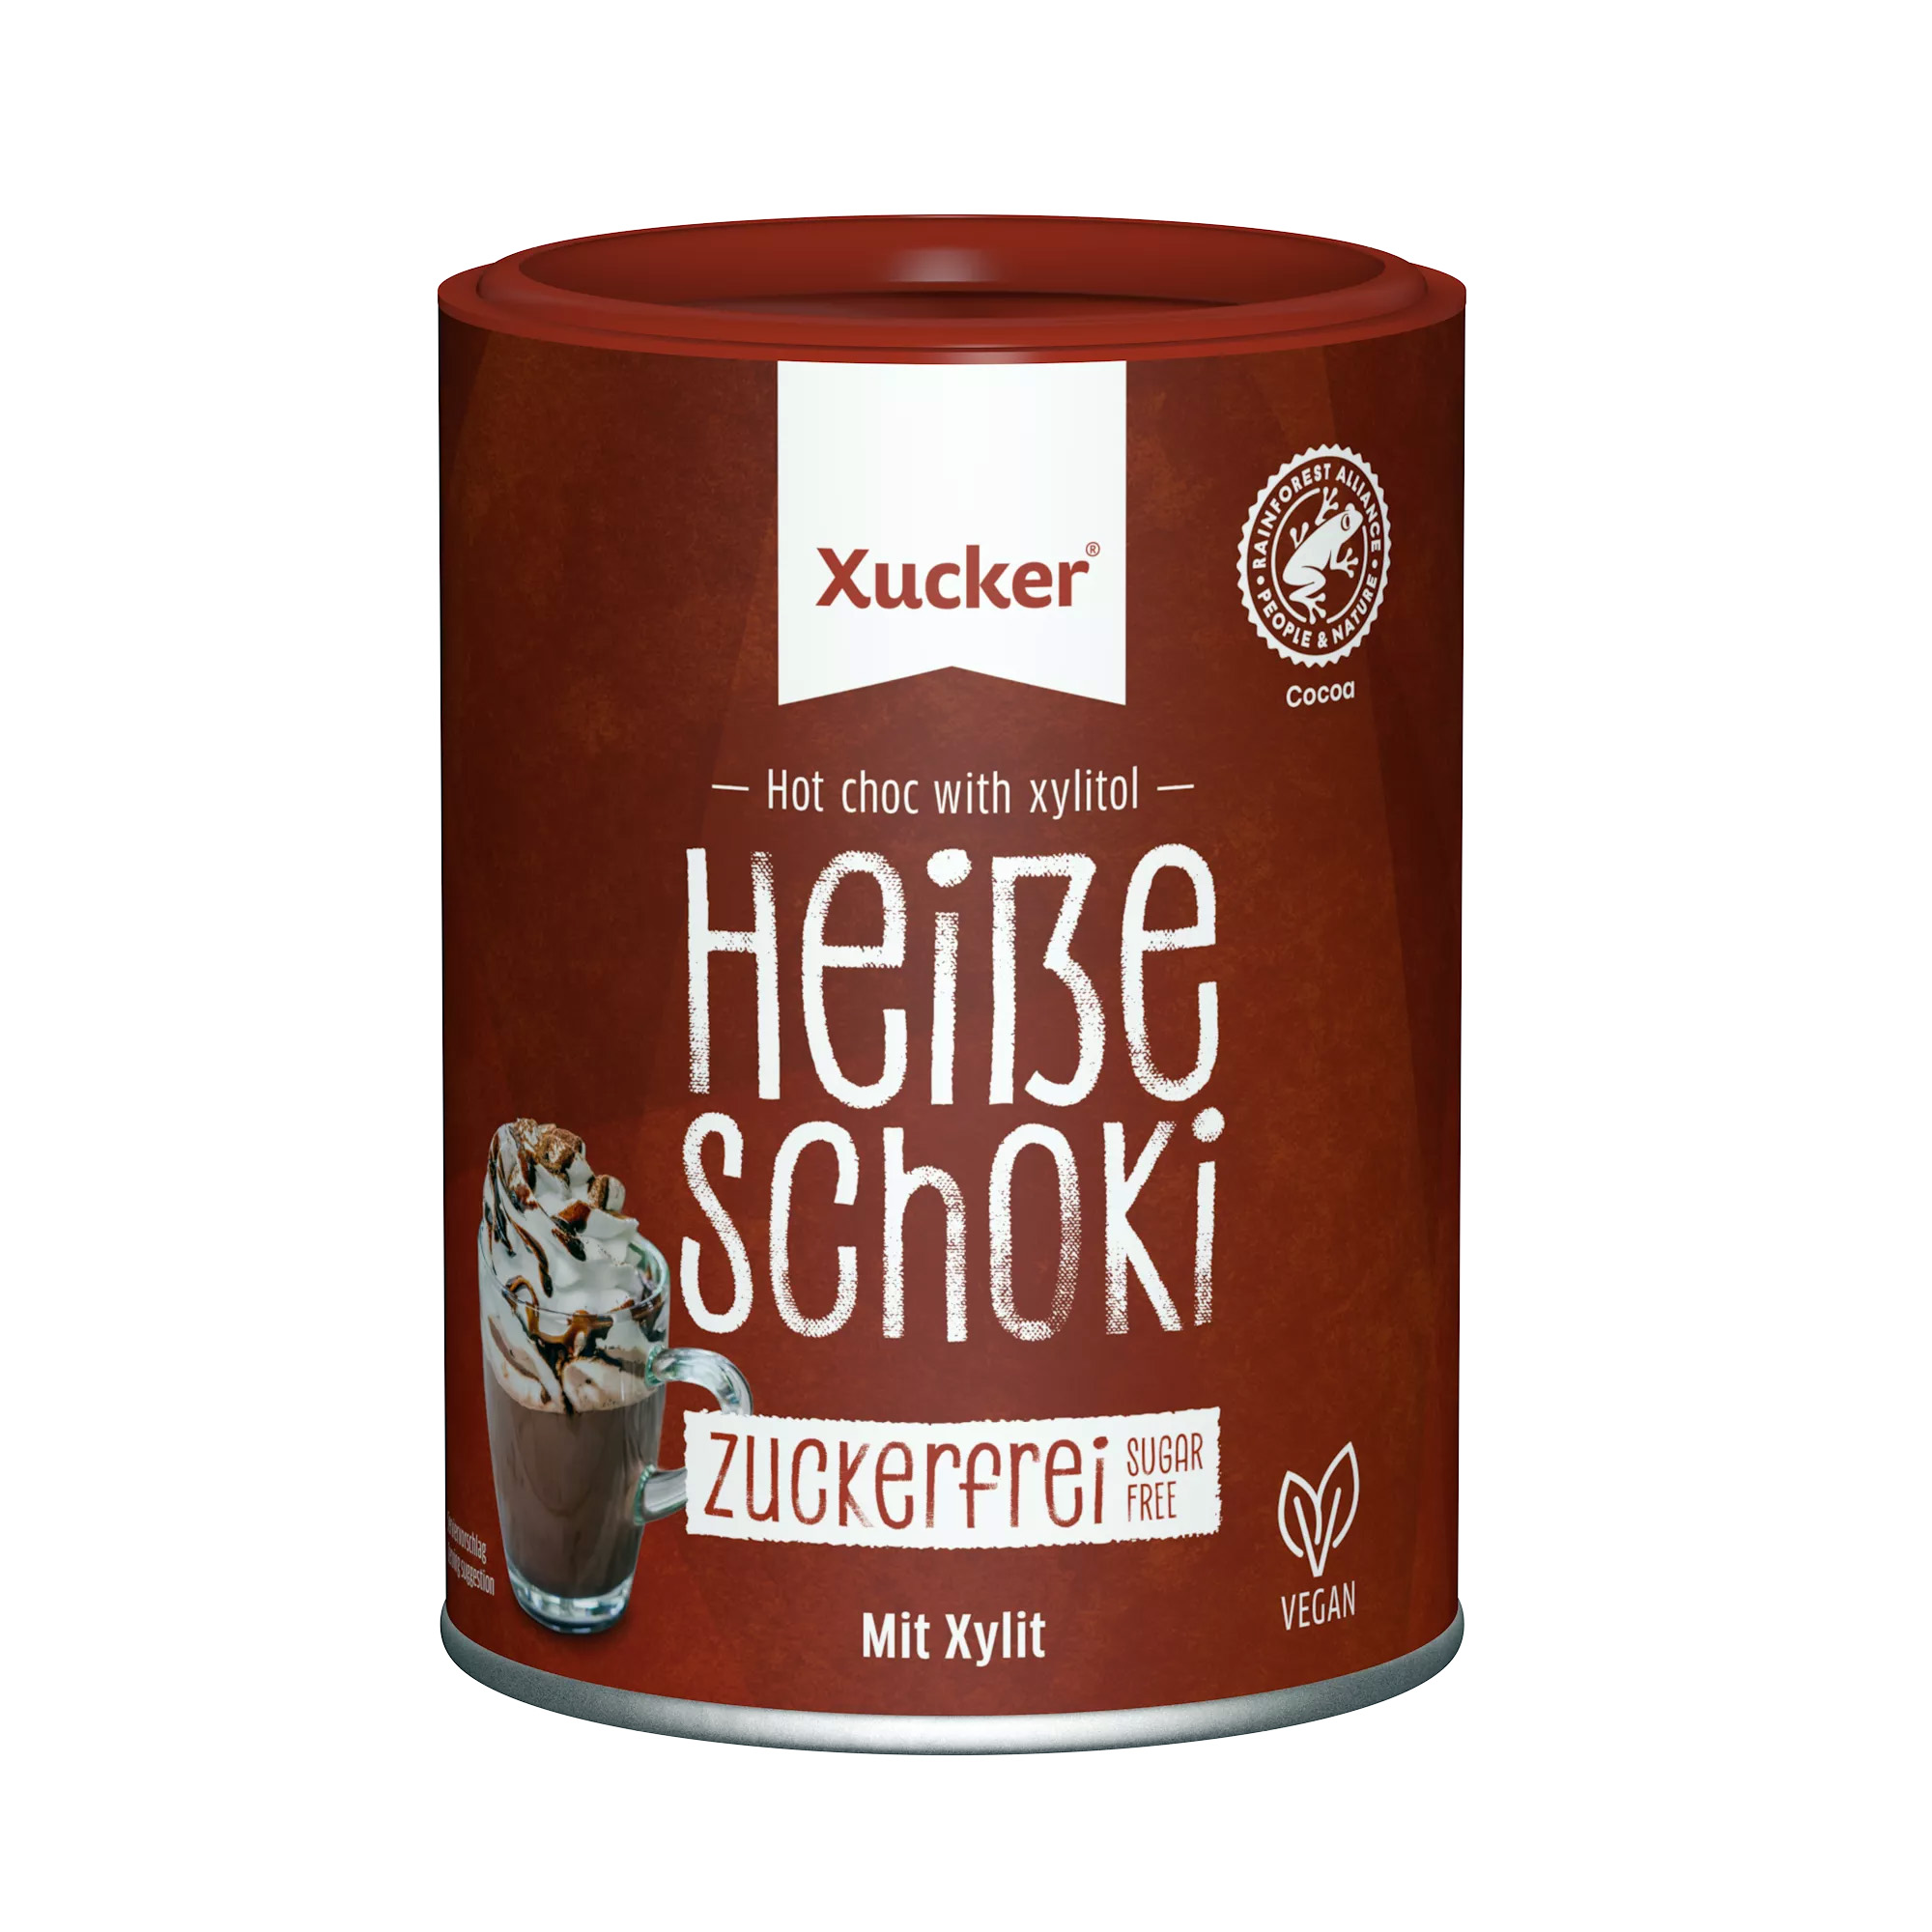 Xucker Heiße Schoki 200g